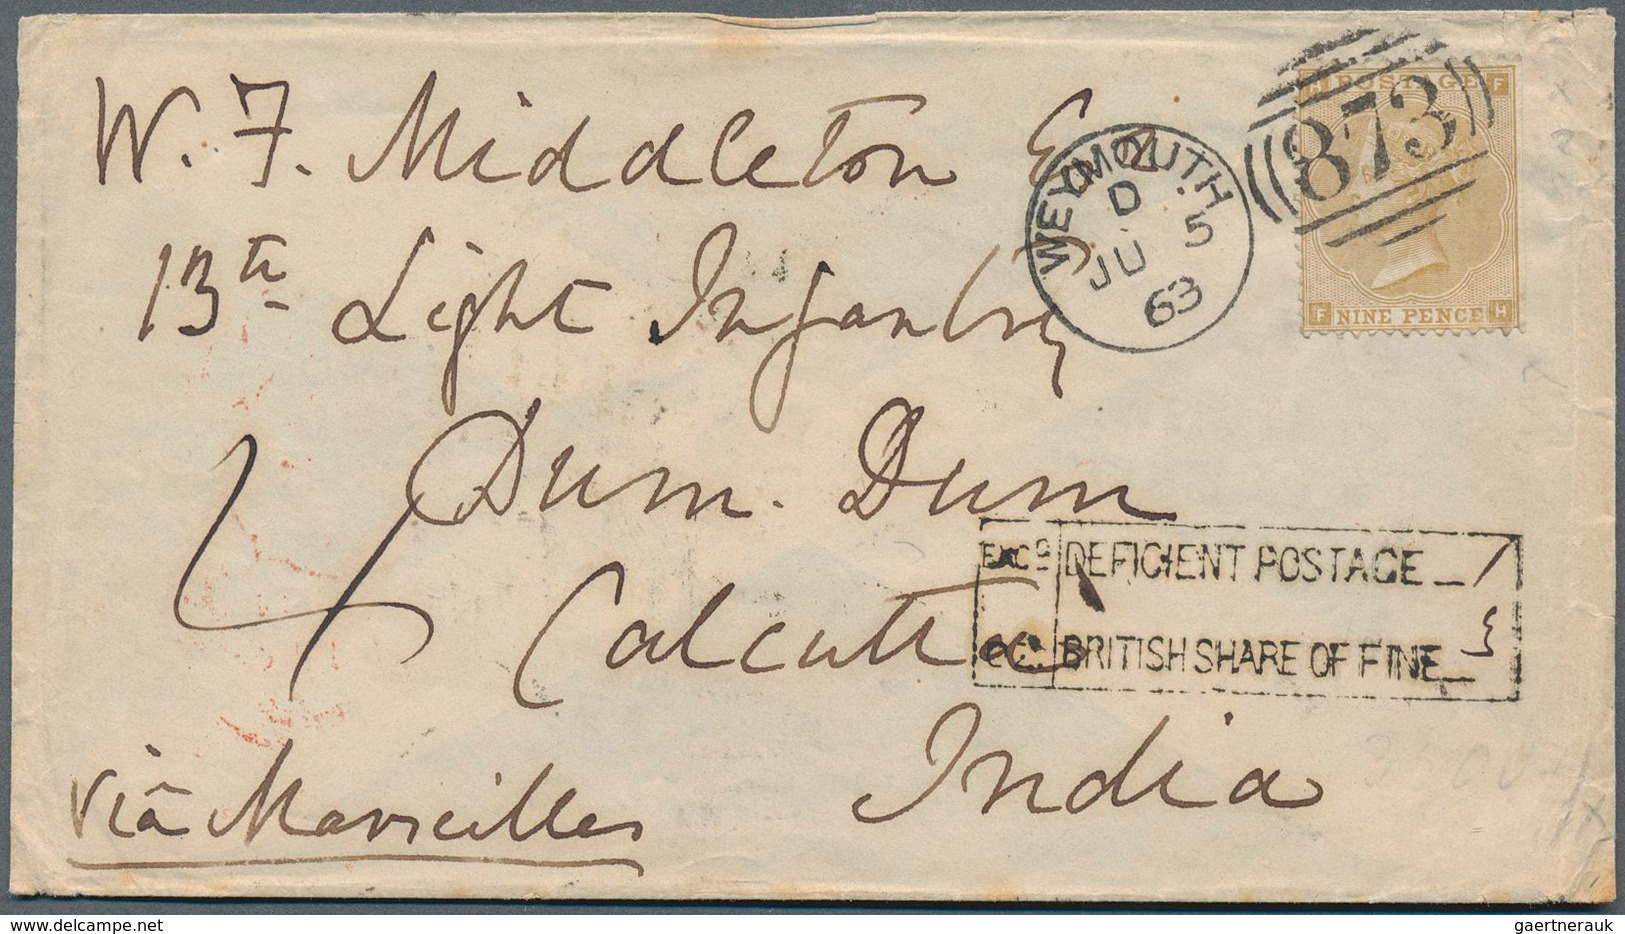 Indien: 1863 "CALCUTTA/STEAMLETTER/1863 JUL 10/Steam Bg./Indian Do." Framed Ship Letter Receipt Date - 1852 Sind Province